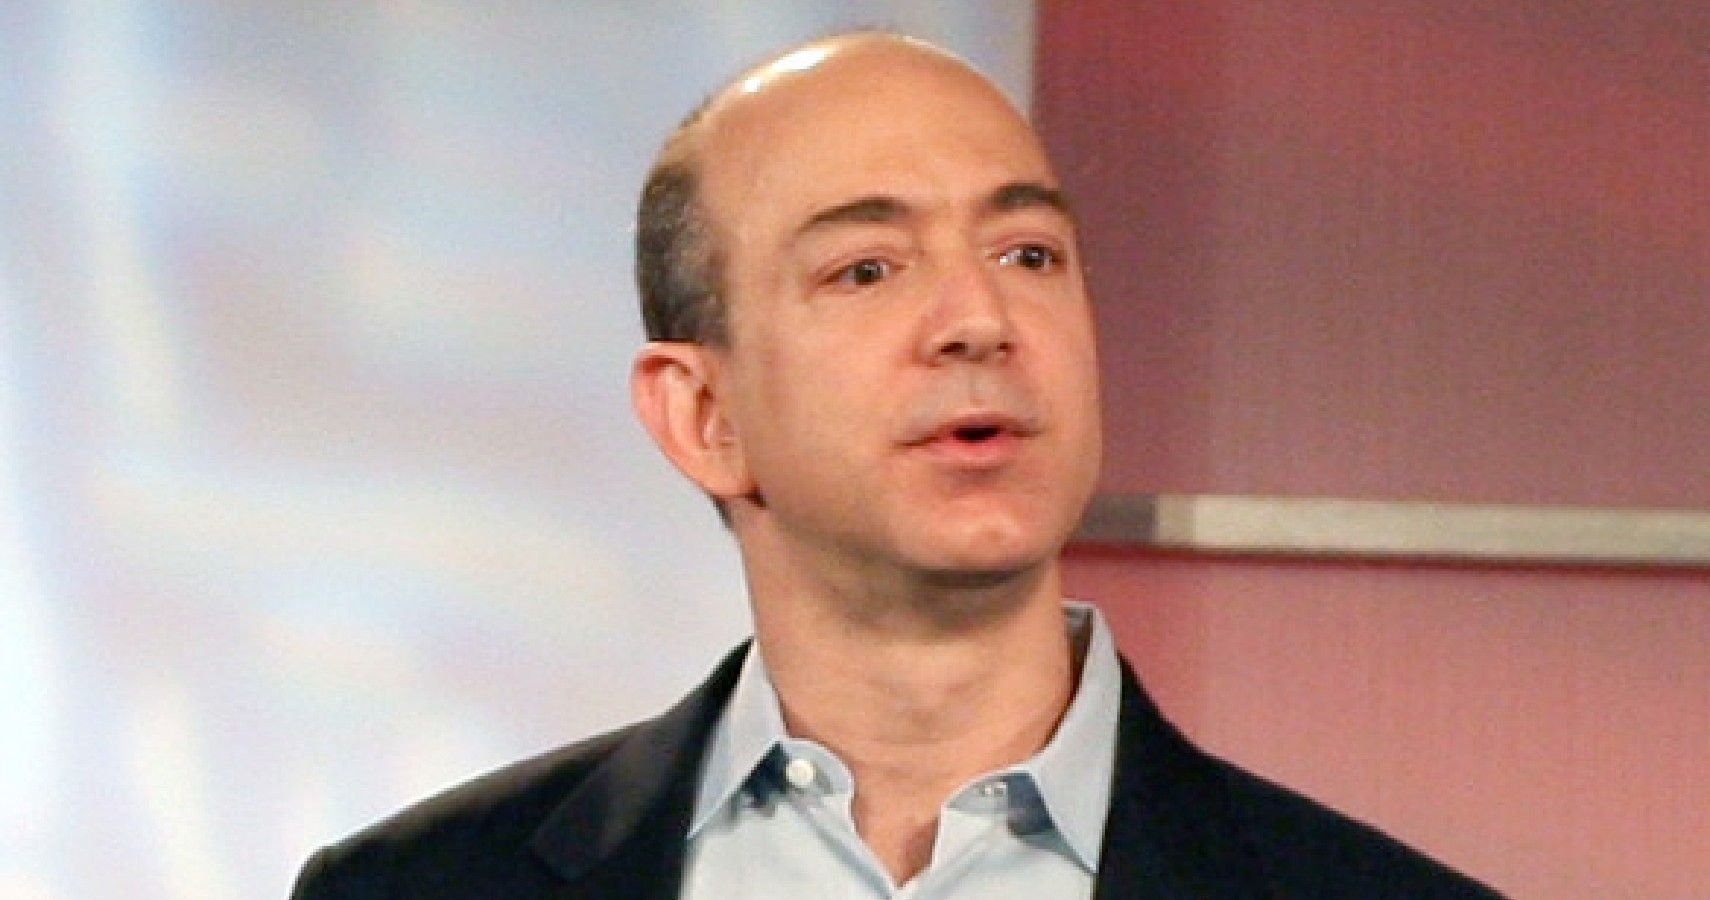 Jeff Bezos Revealed As Mysterious $500 Million Superyacht Owner